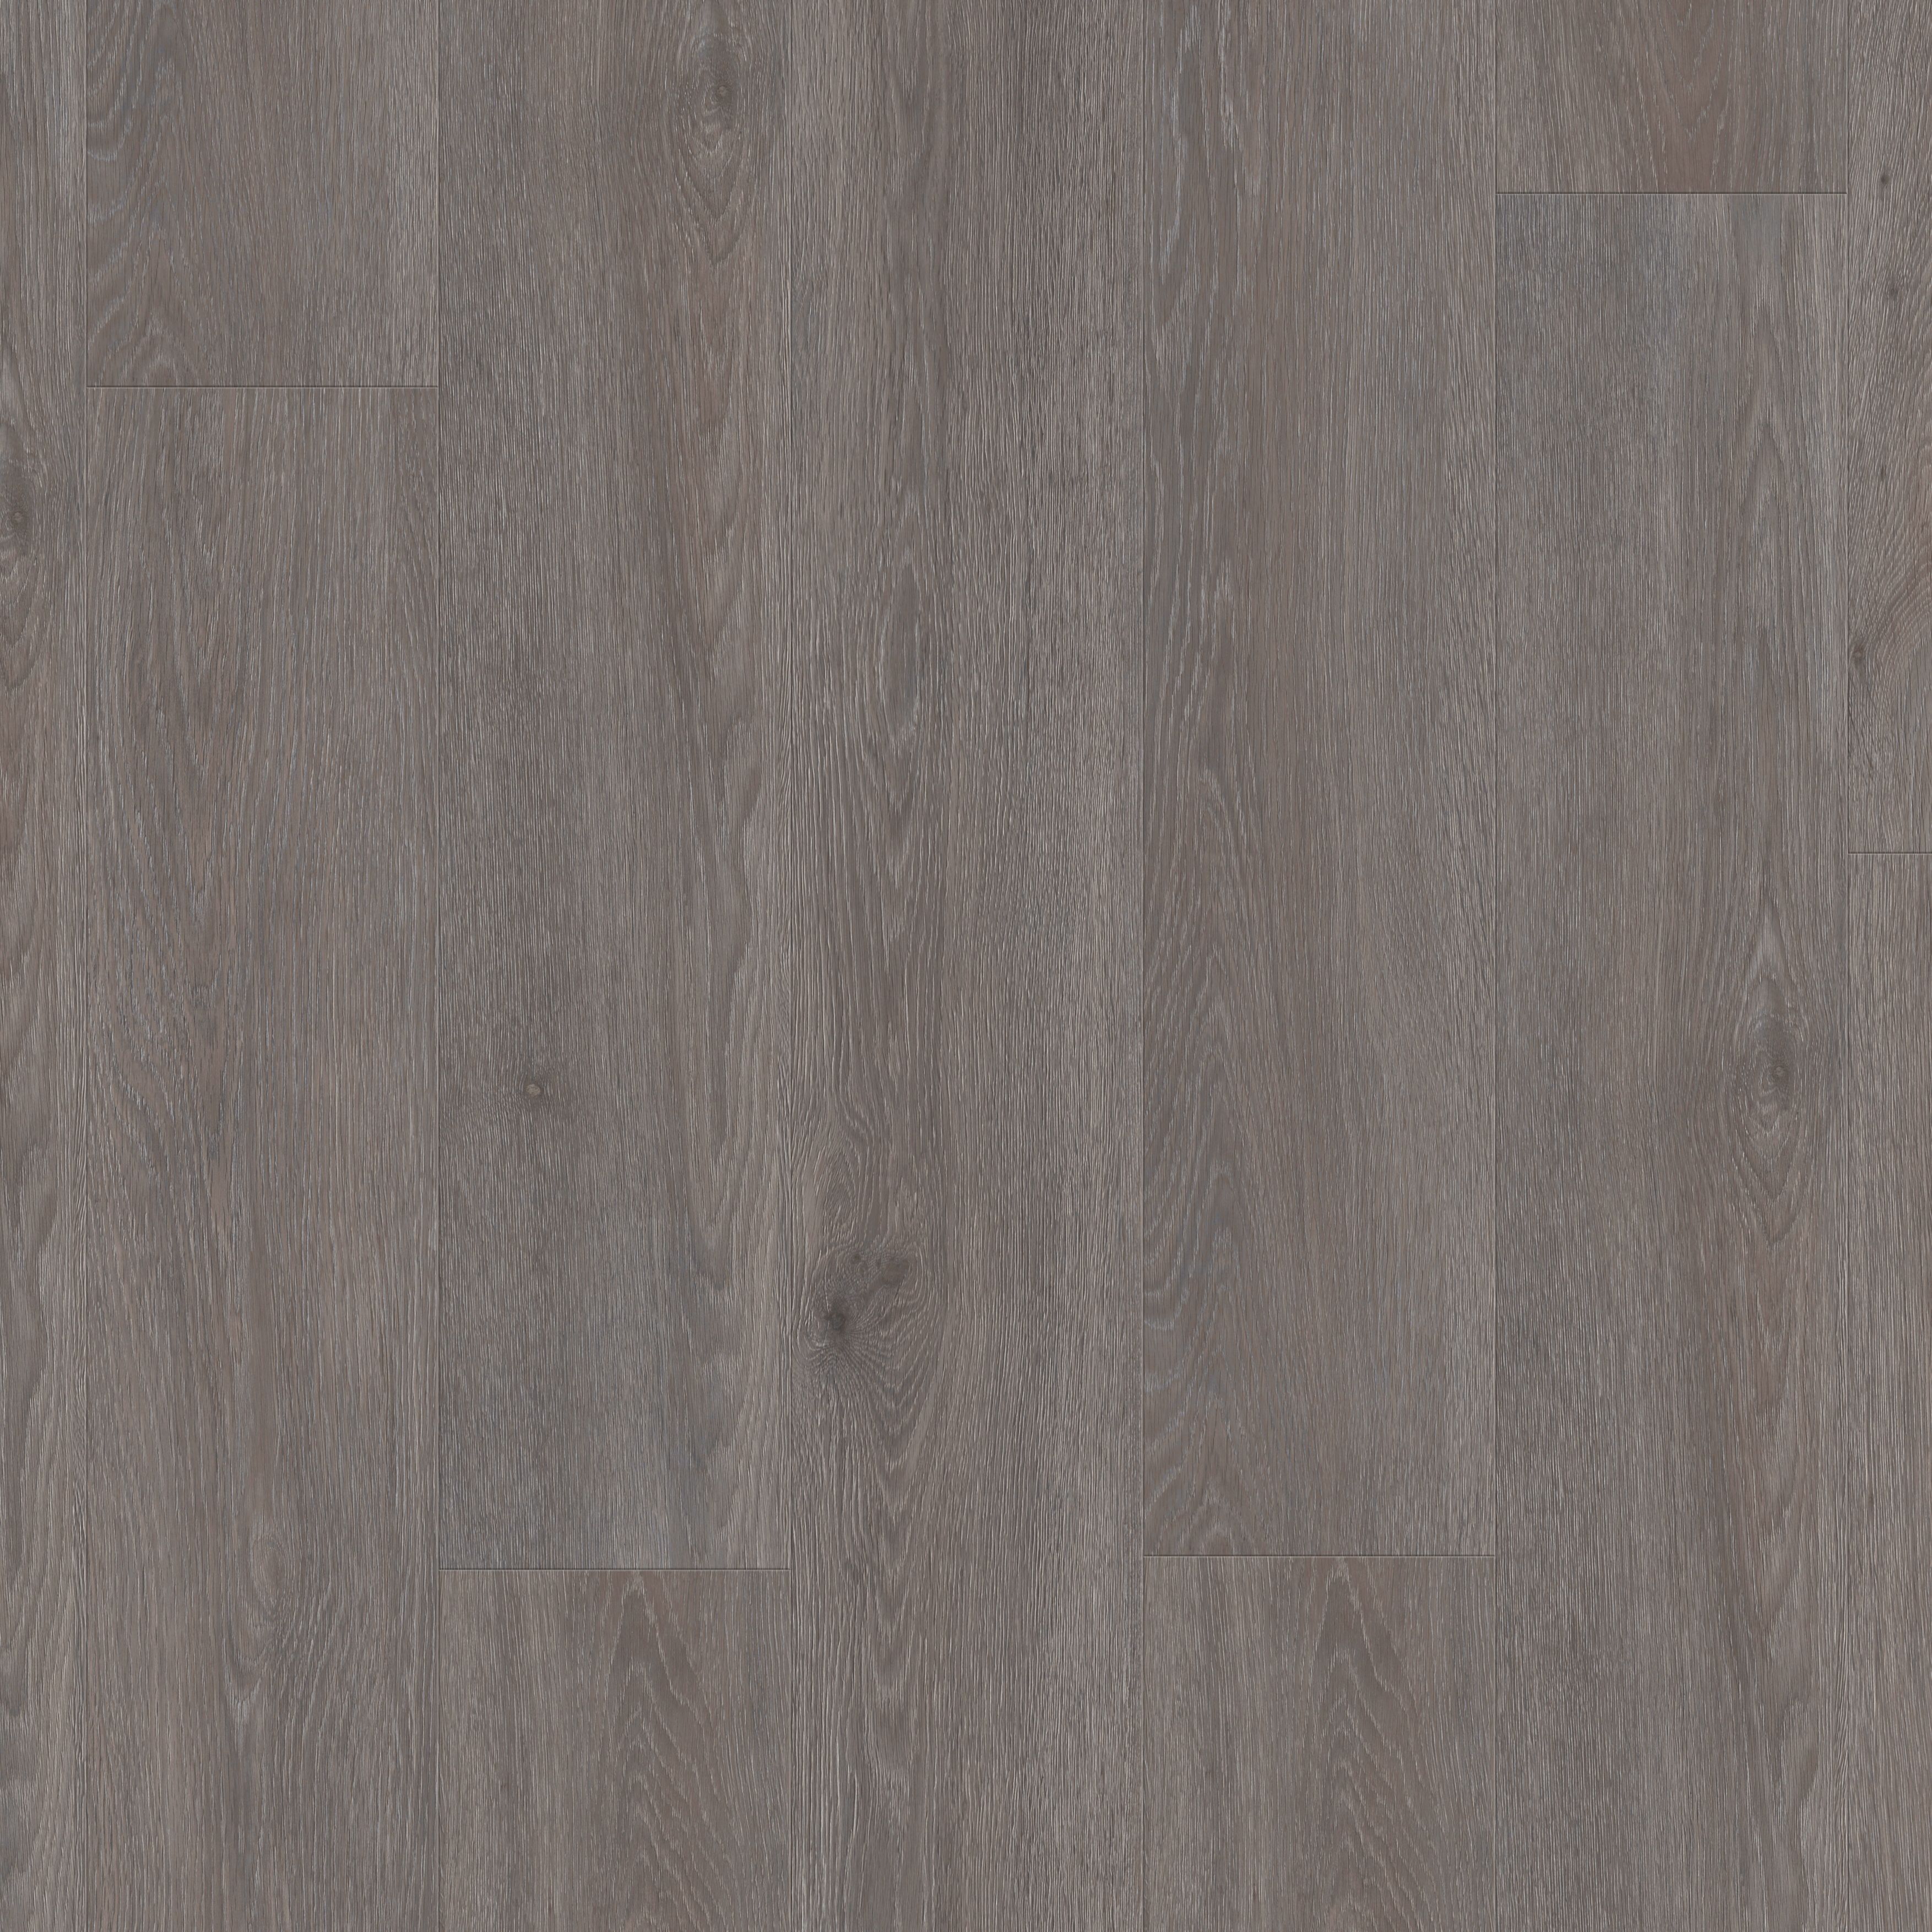 Quick-step Paso Smokey oak Wood effect Luxury vinyl click Flooring, 2.128m²